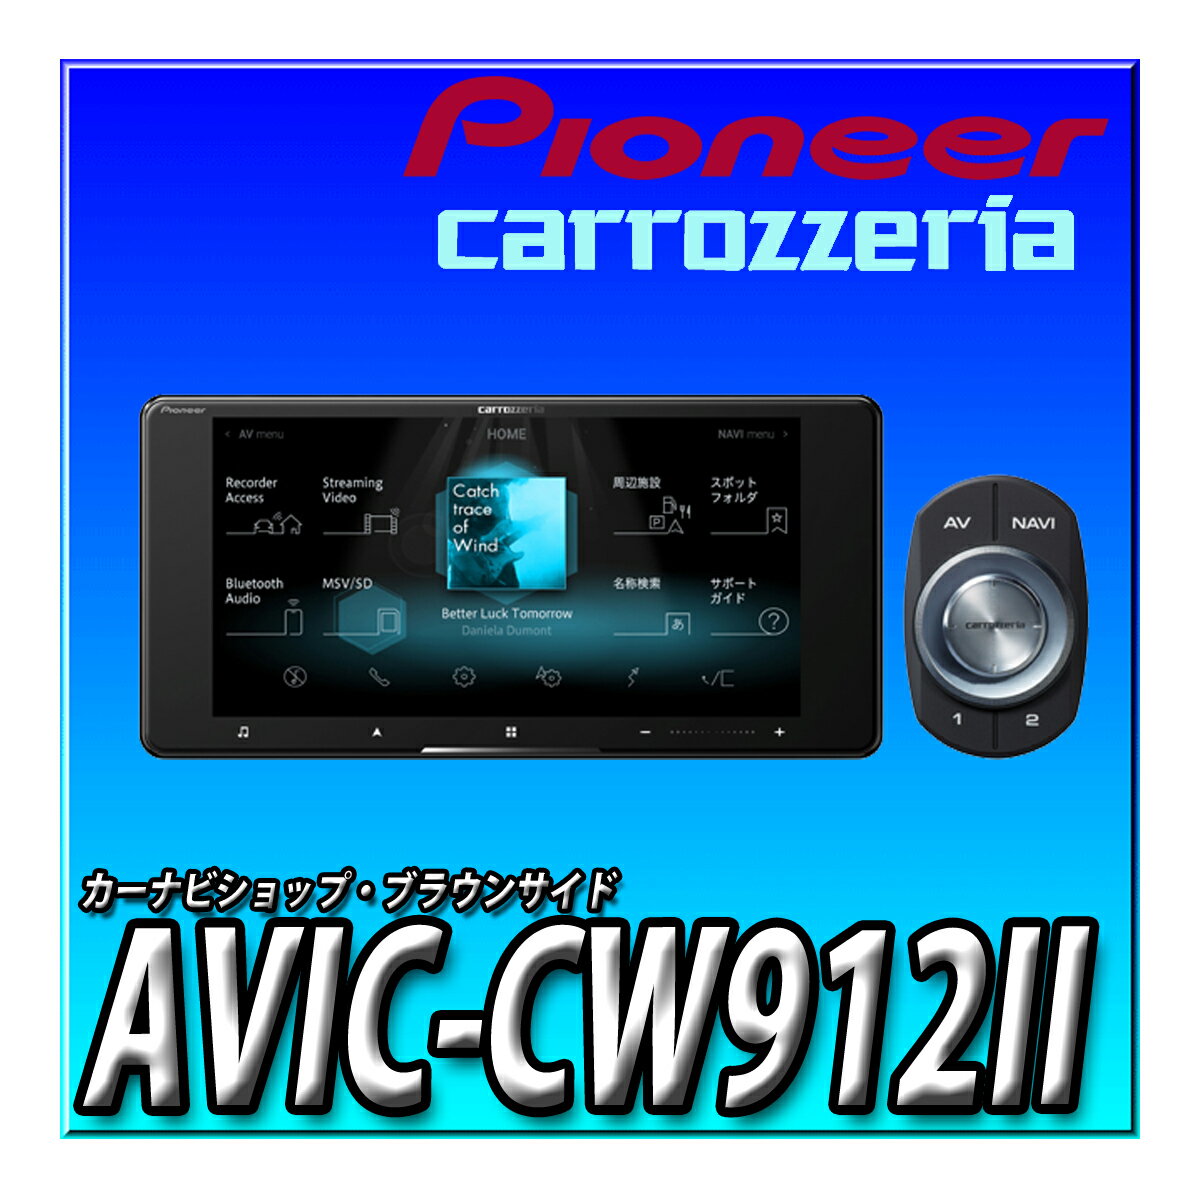 AVIC-CW912II パイオニア カーナビ 7インチ 200mmワイド サイバーナビ 無料地図更新 フルセグ DVD CD Bluetooth SD USB ハイレゾ HD画質 カロッツェリア